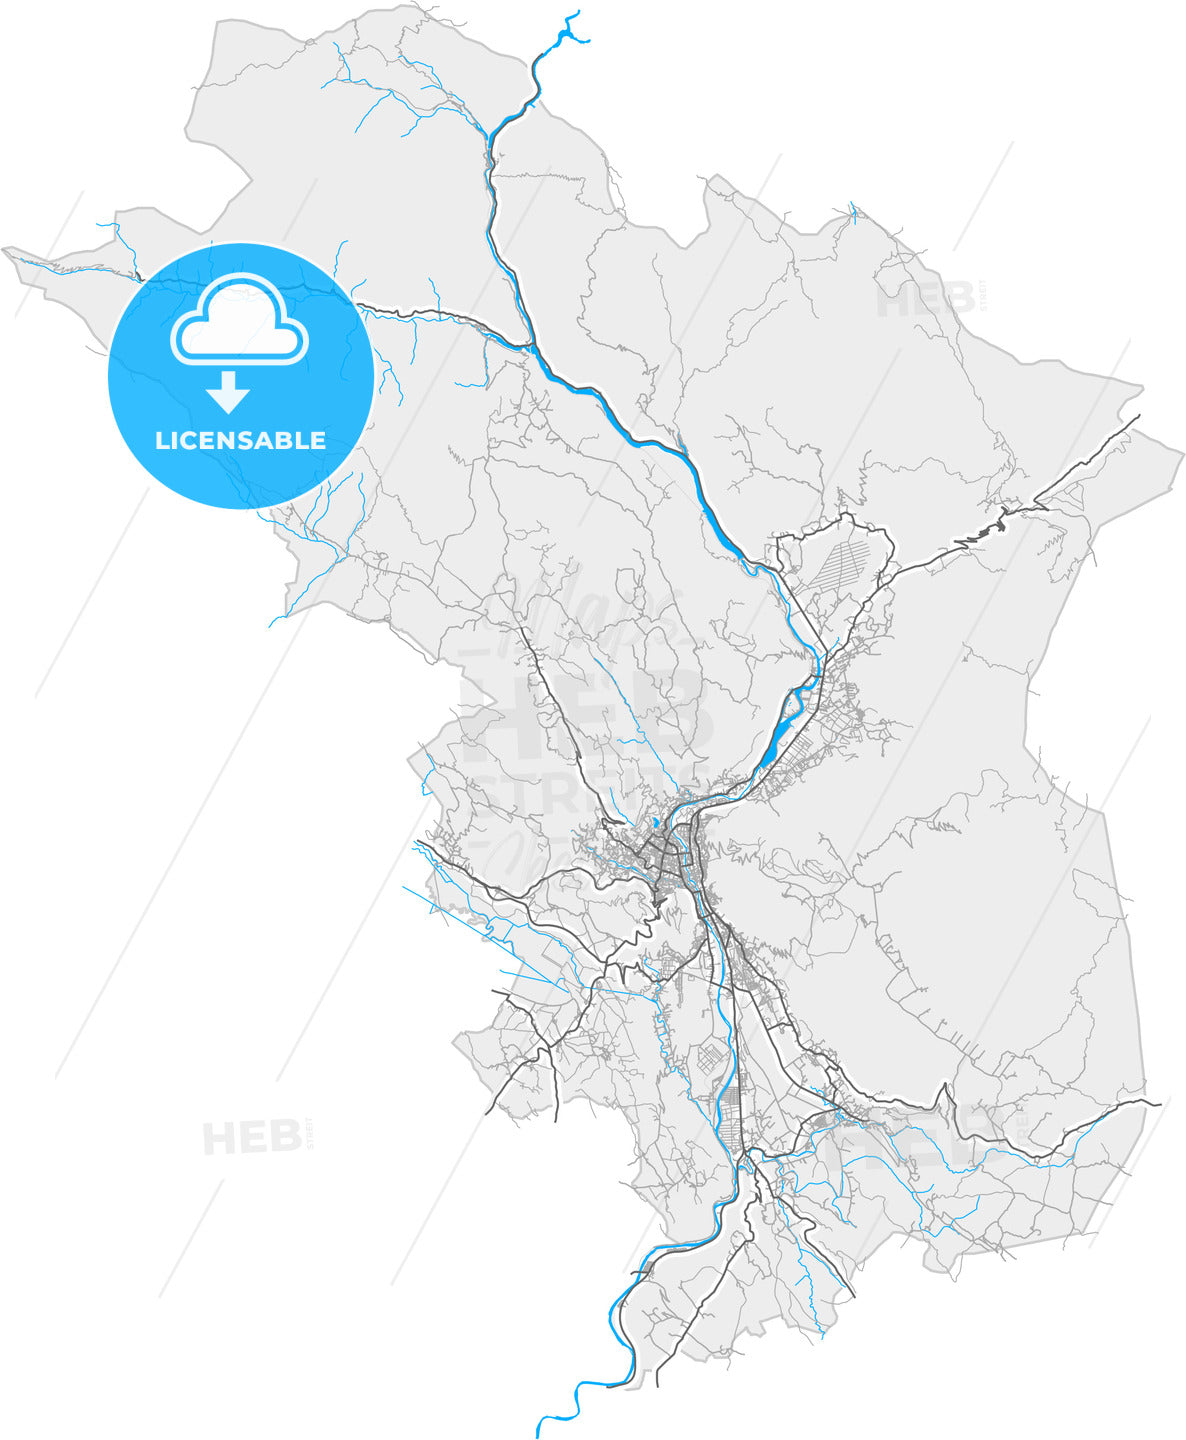 Mostar, Herzegovina-Neretva Canton, Bosnia and Herzegovina, high quality vector map